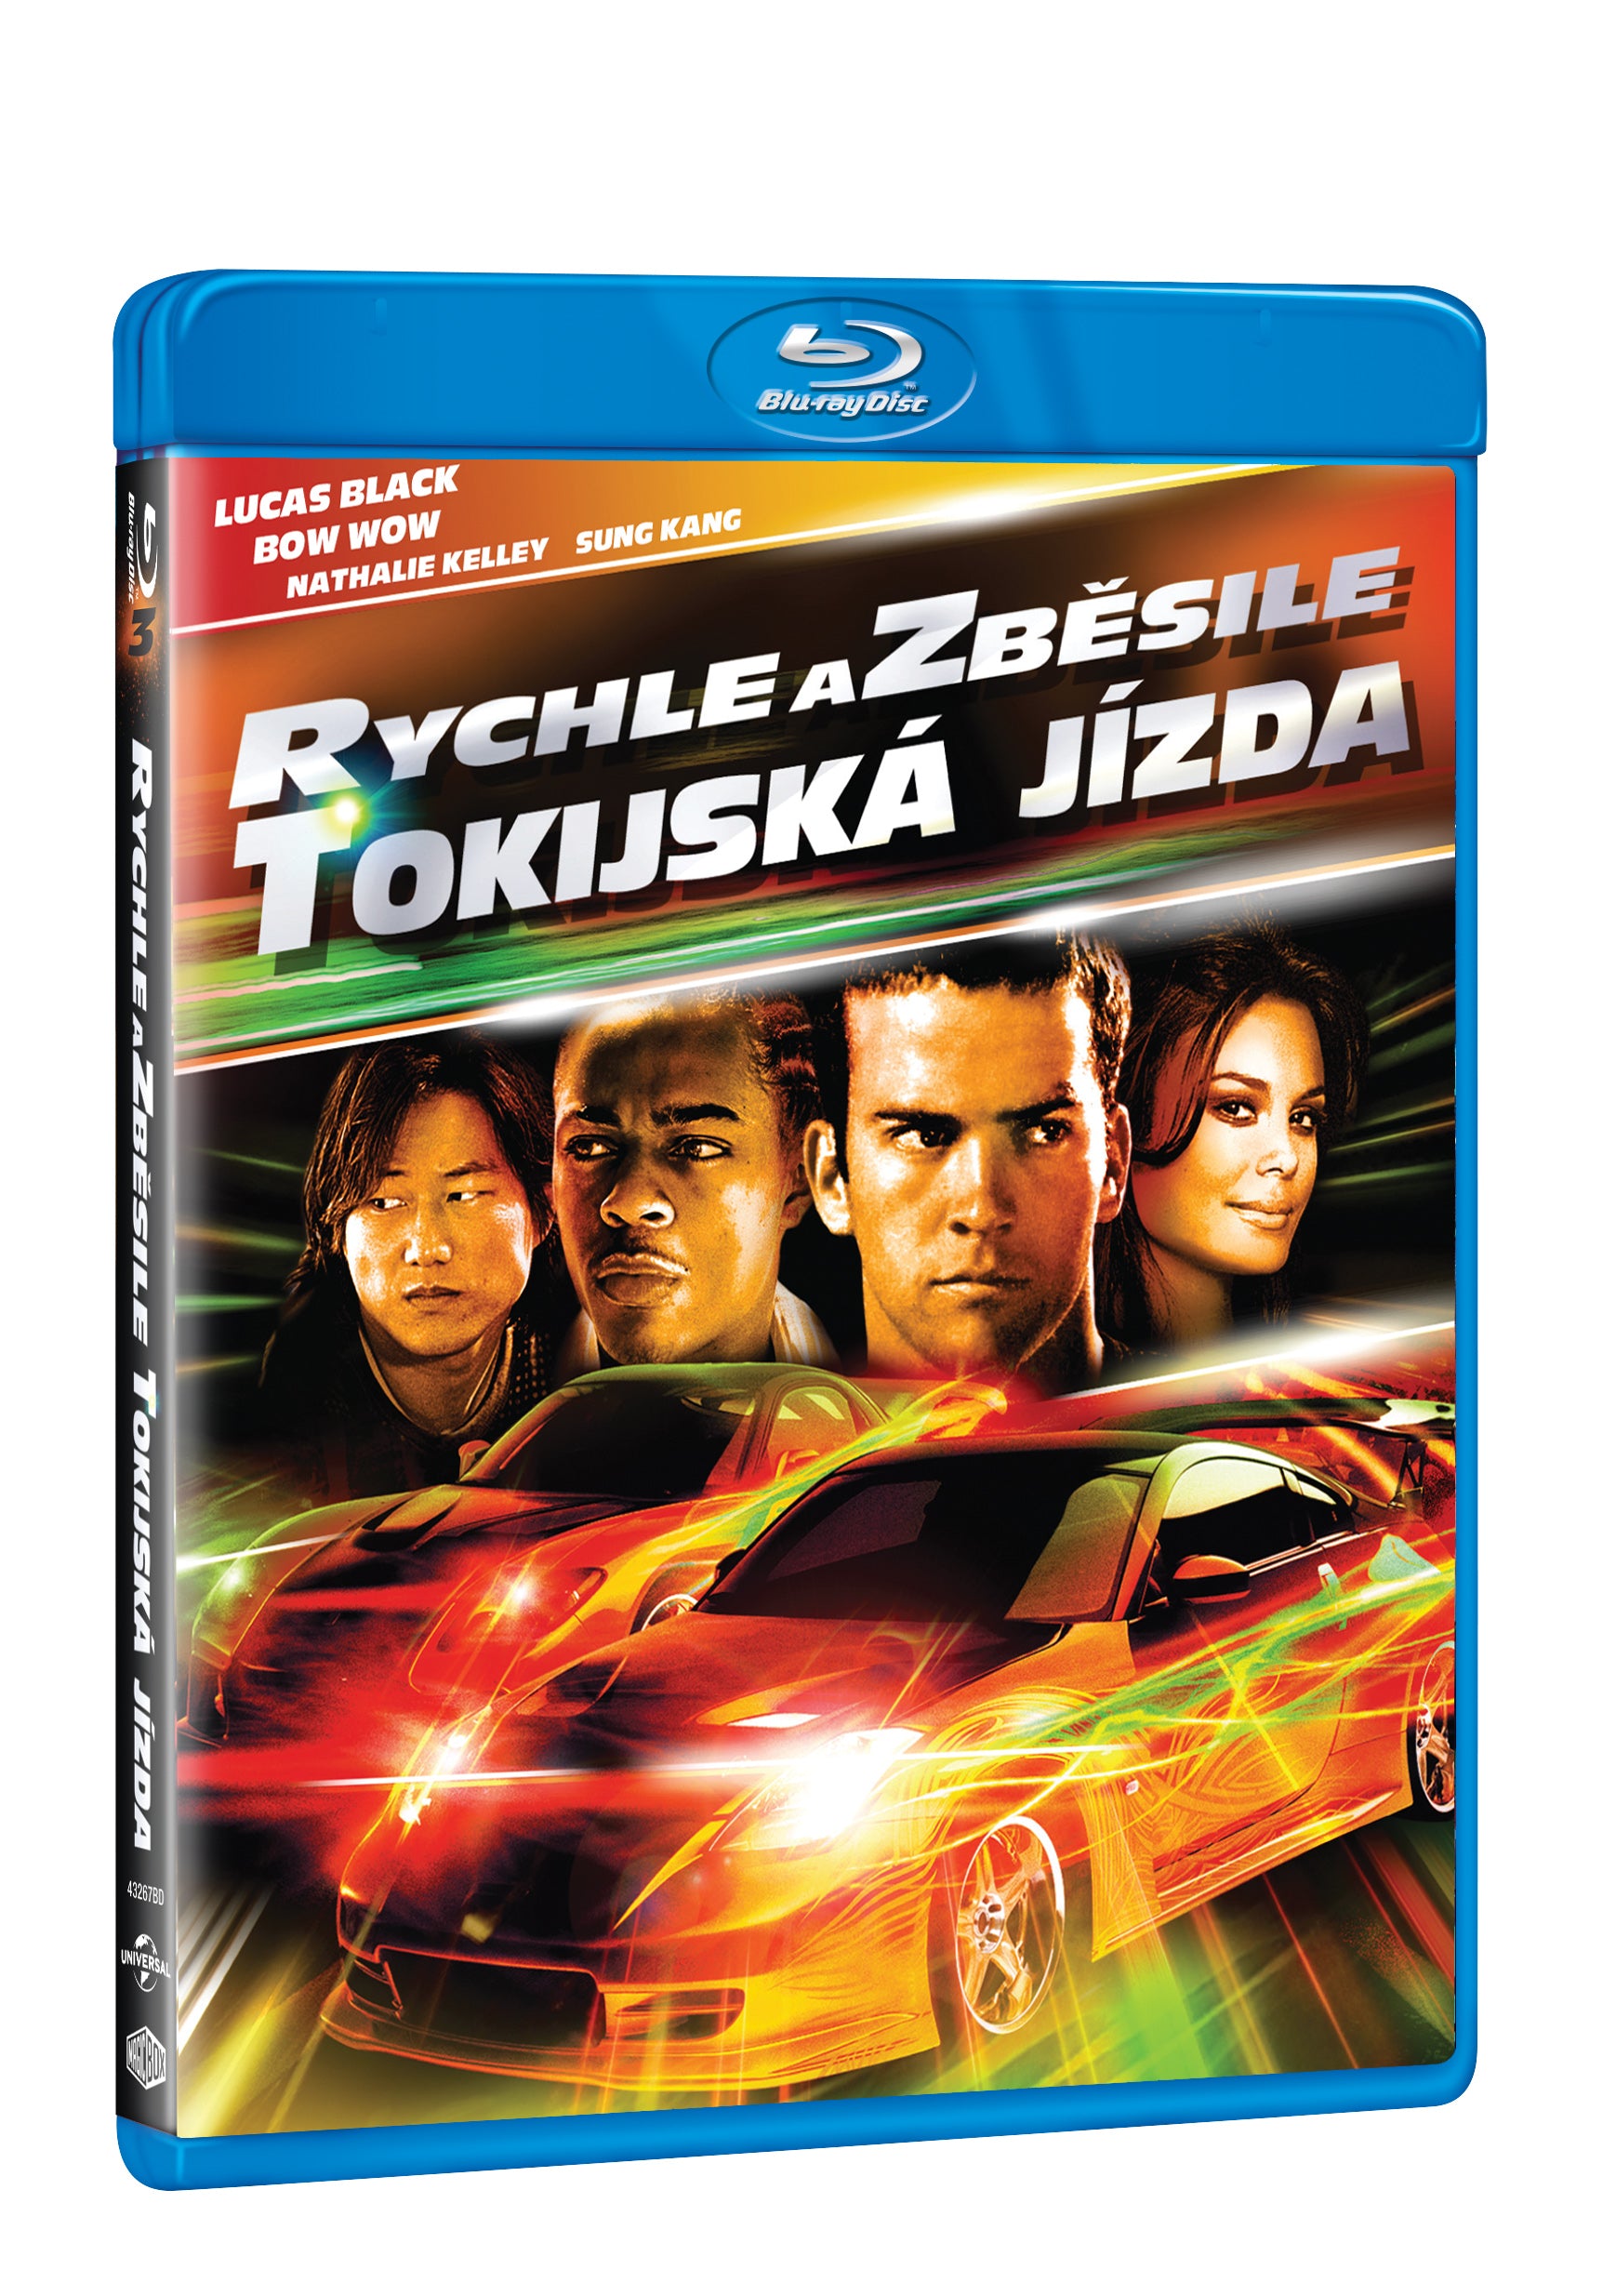 Rychle a zbesile: Tokijska jizda BD / The Fast and the Furious: Tokyo Drift - Czech version